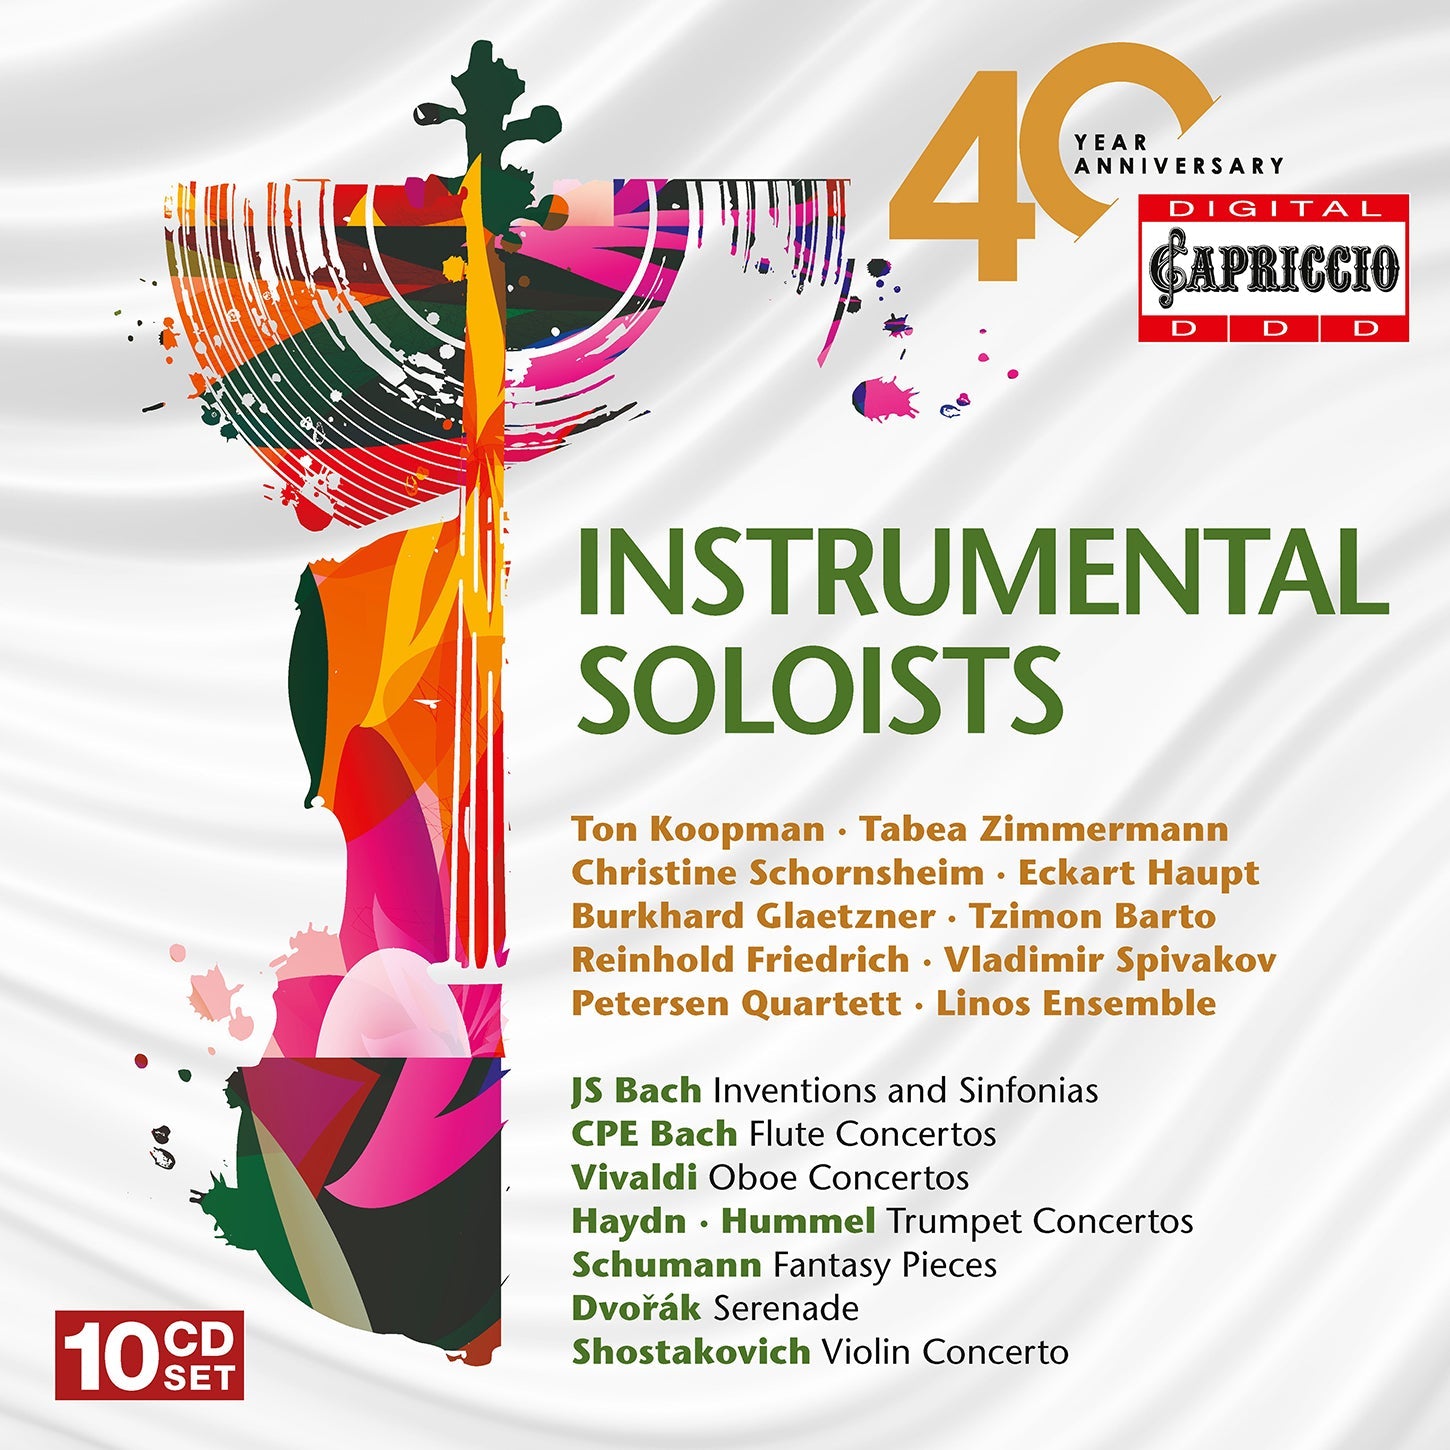 Capriccio's 40th Anniversary: Instrumental Soloists from Barto to Zimmermann